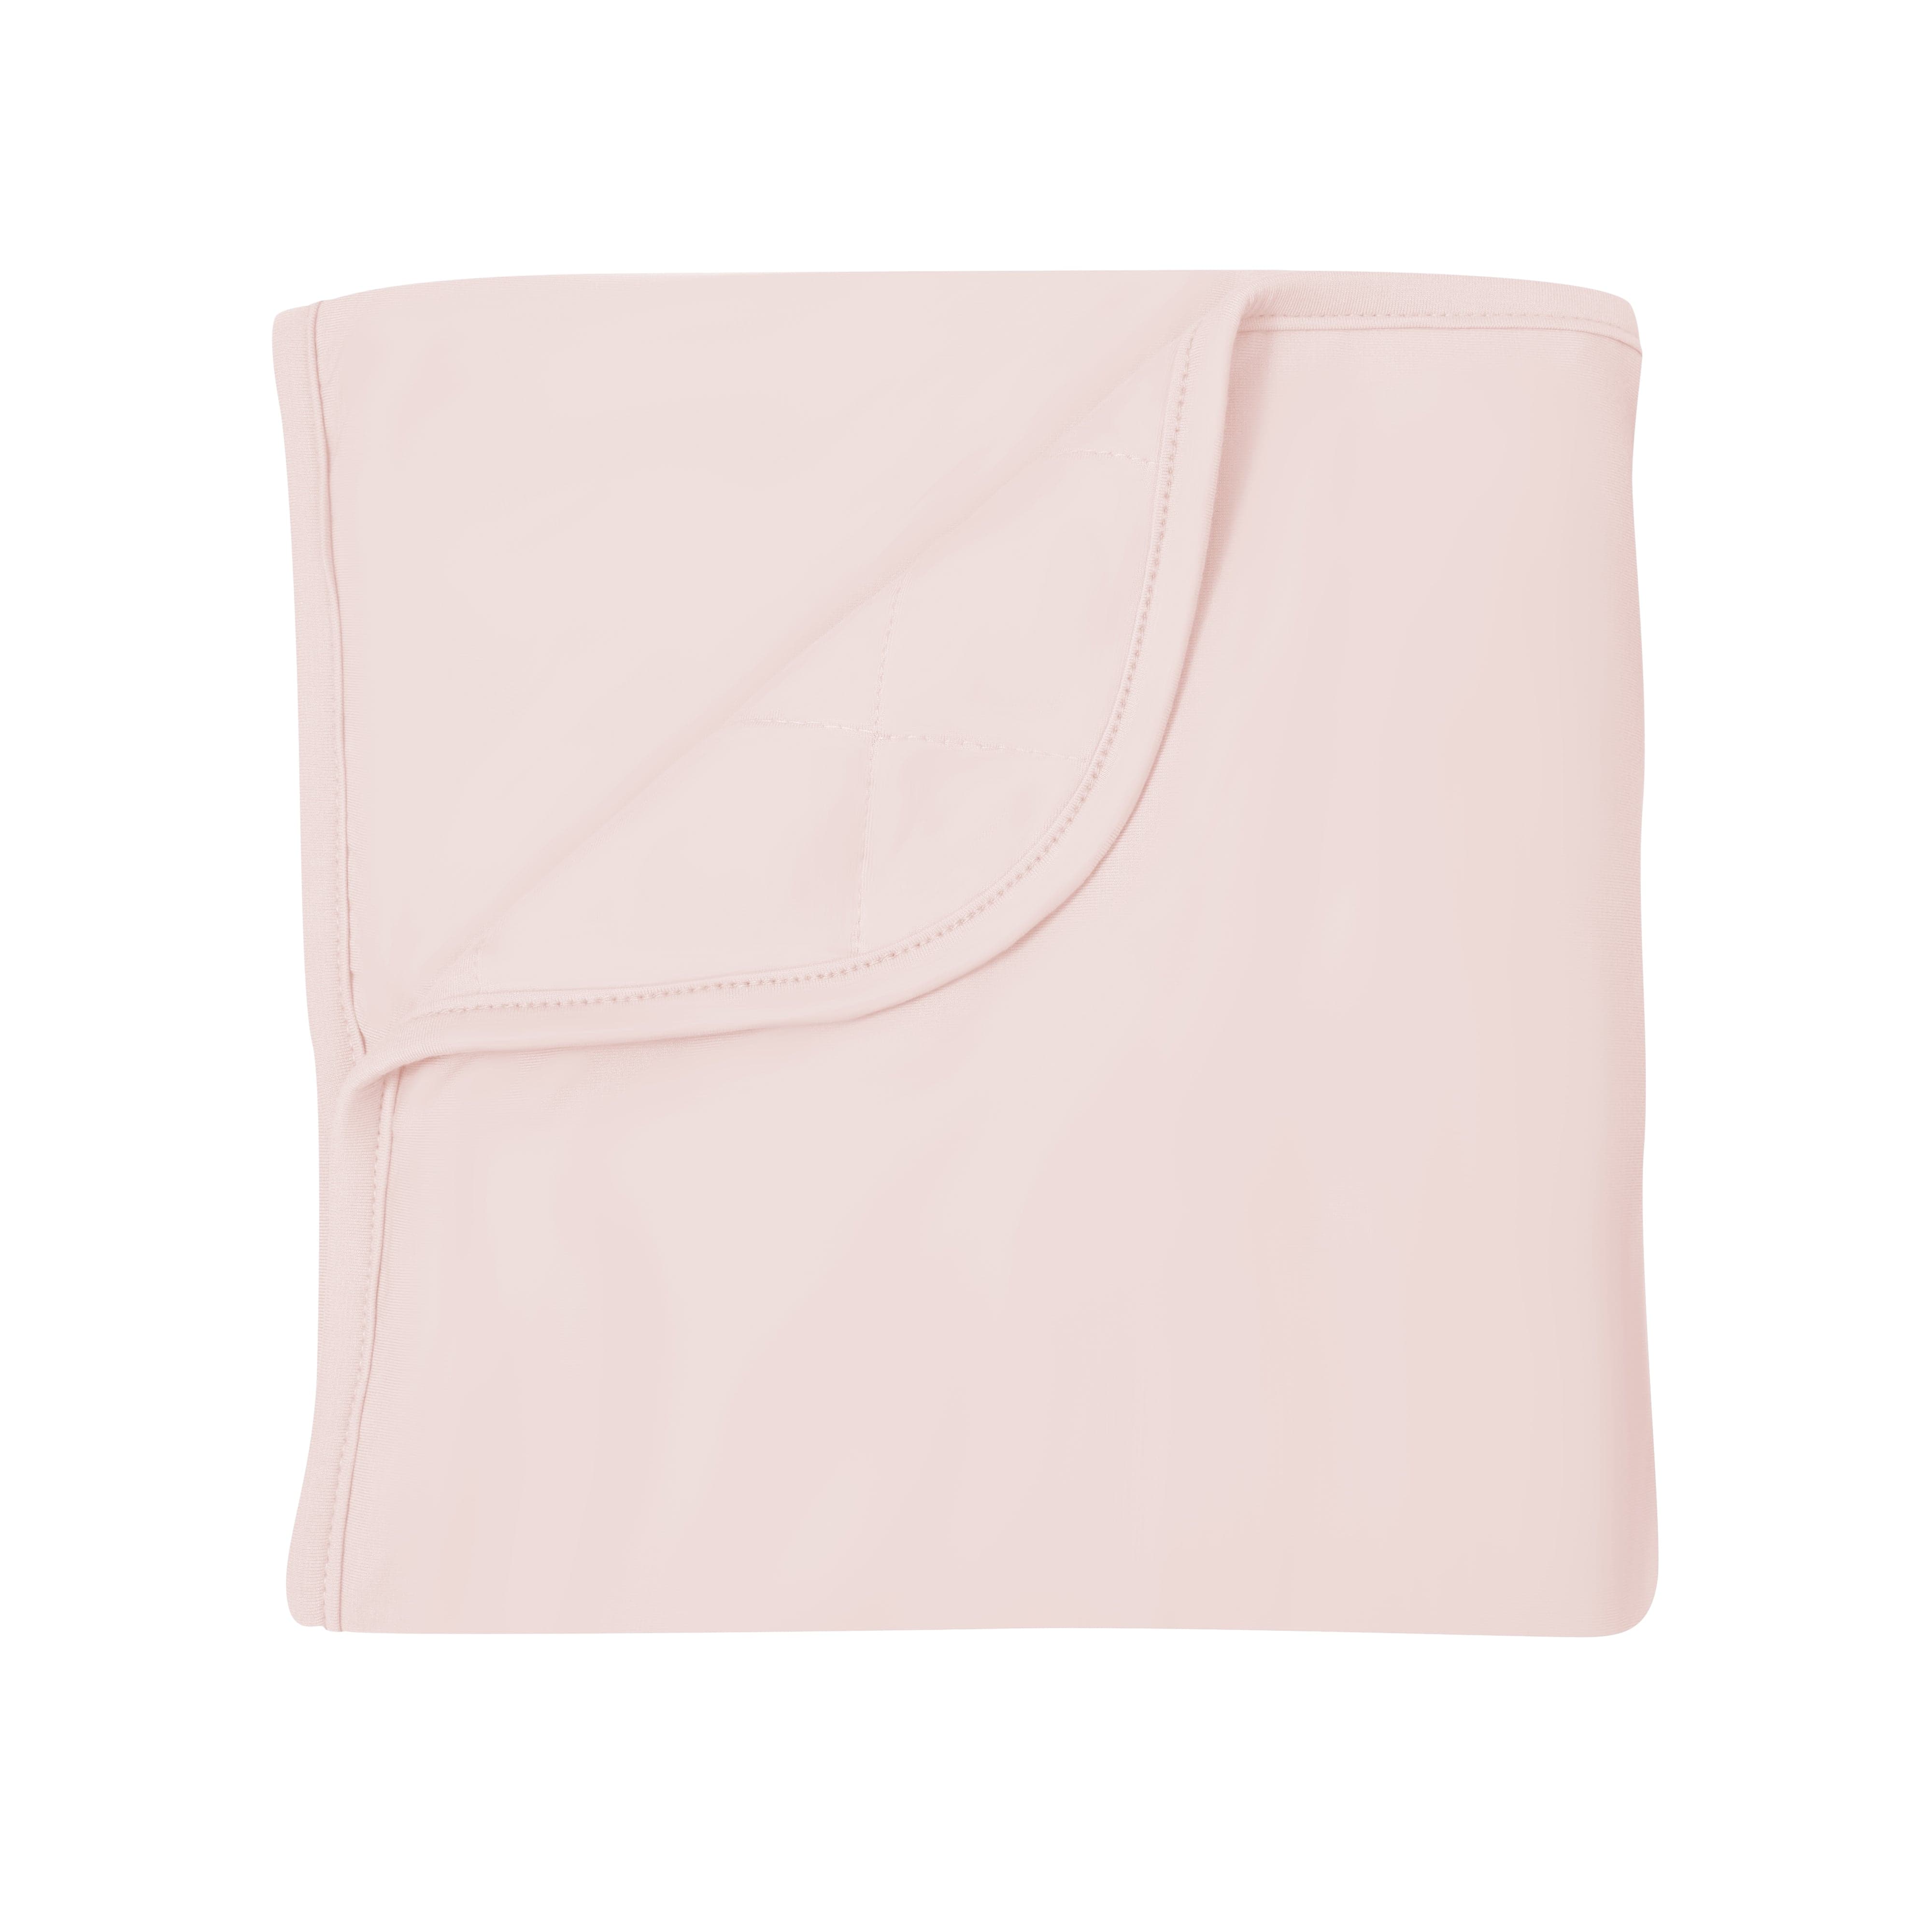 Kyte Baby Blanket in Blush Pink